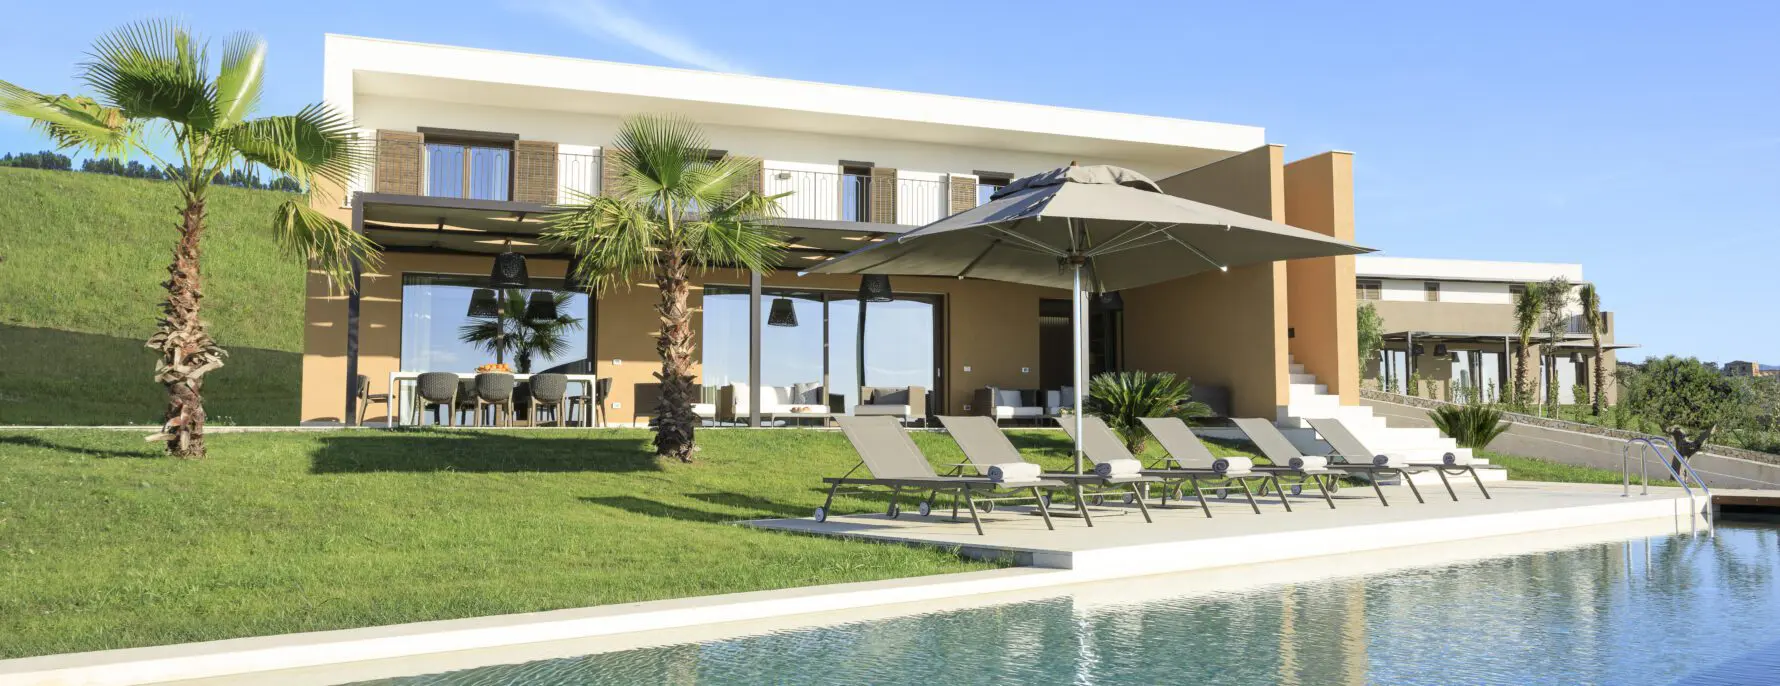 Nest Italy: Private Villas in a Resort in Sicily